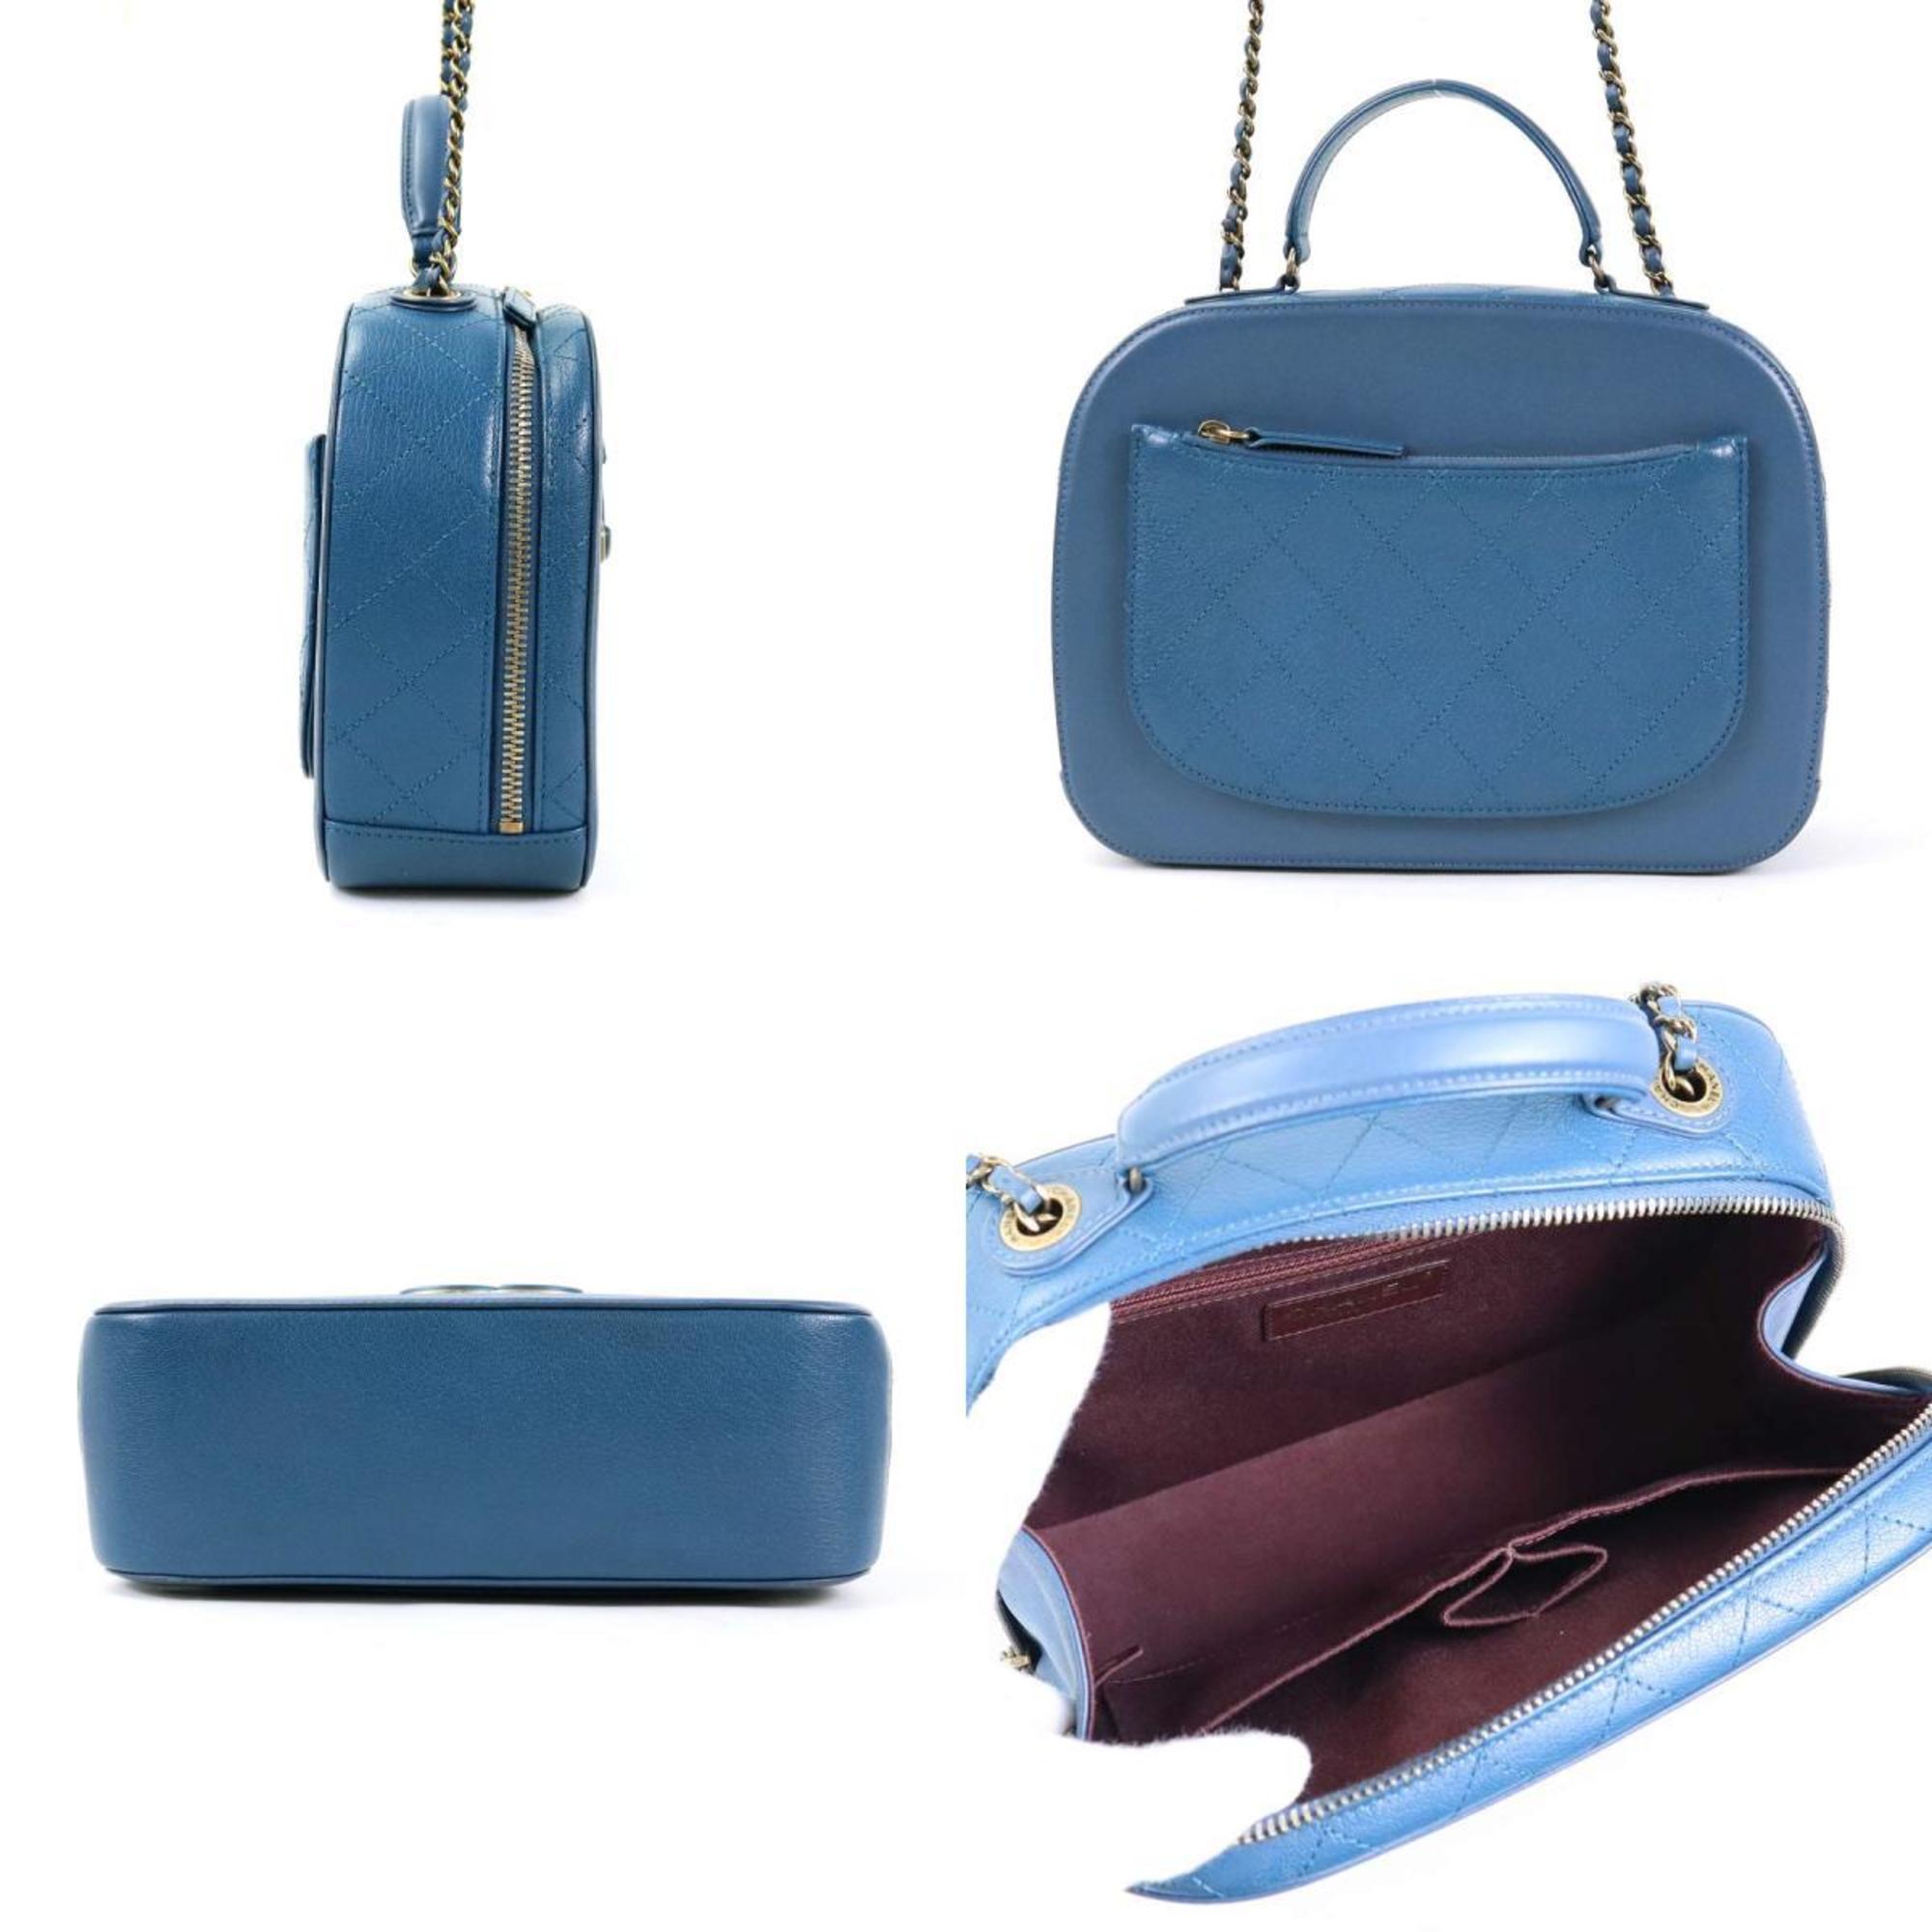 CHANEL Shoulder Bag Coco Mark Leather Blue Ladies